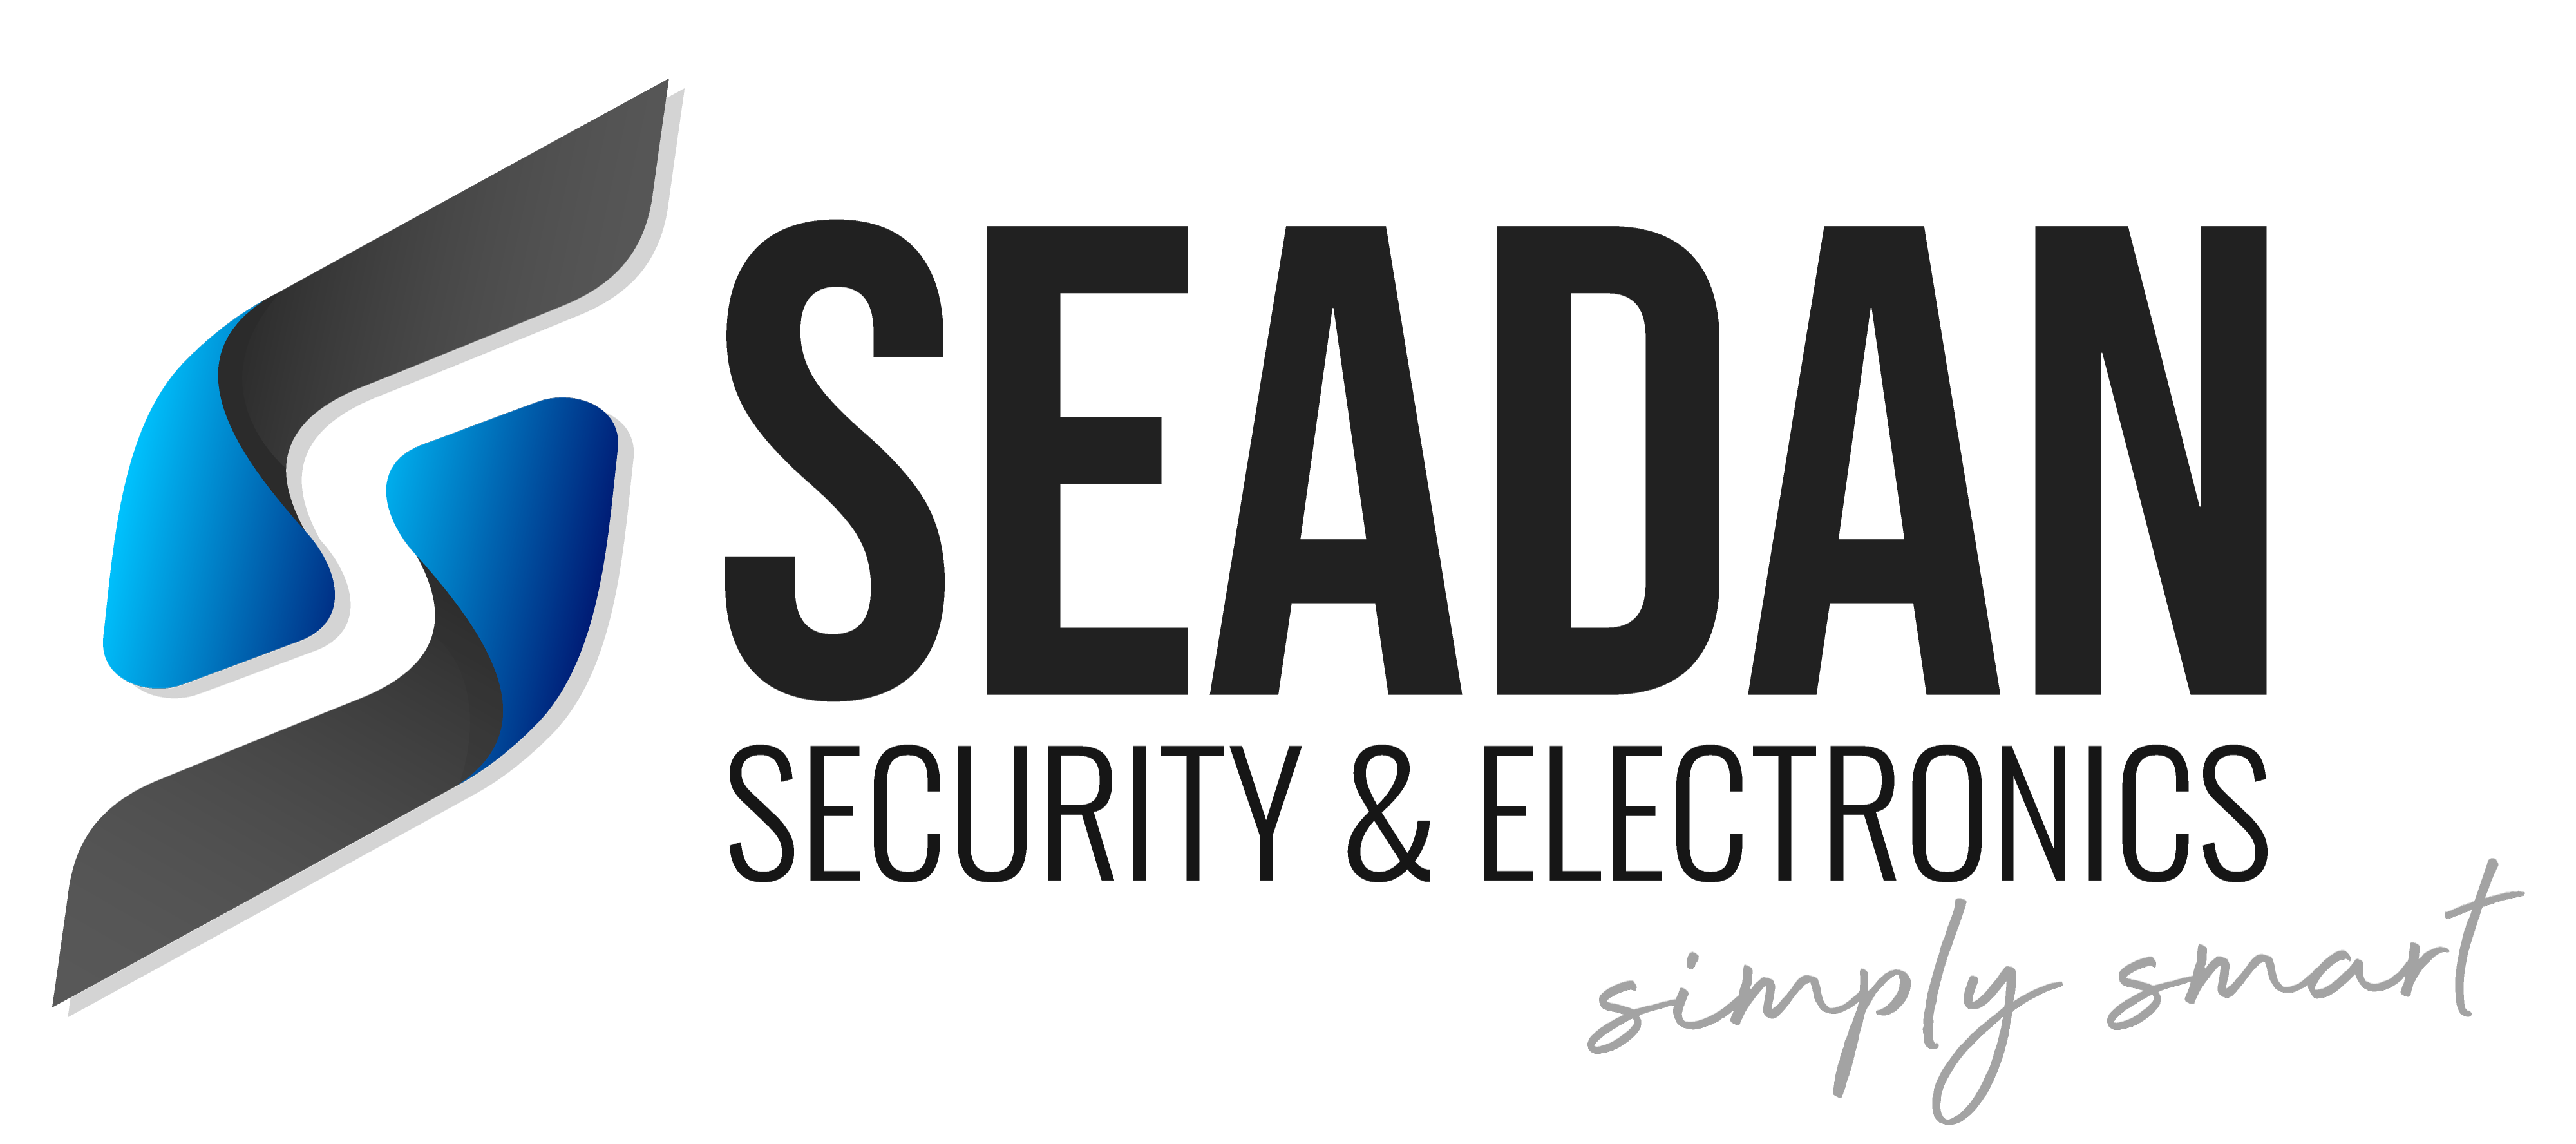 Seadan Security & Electronics